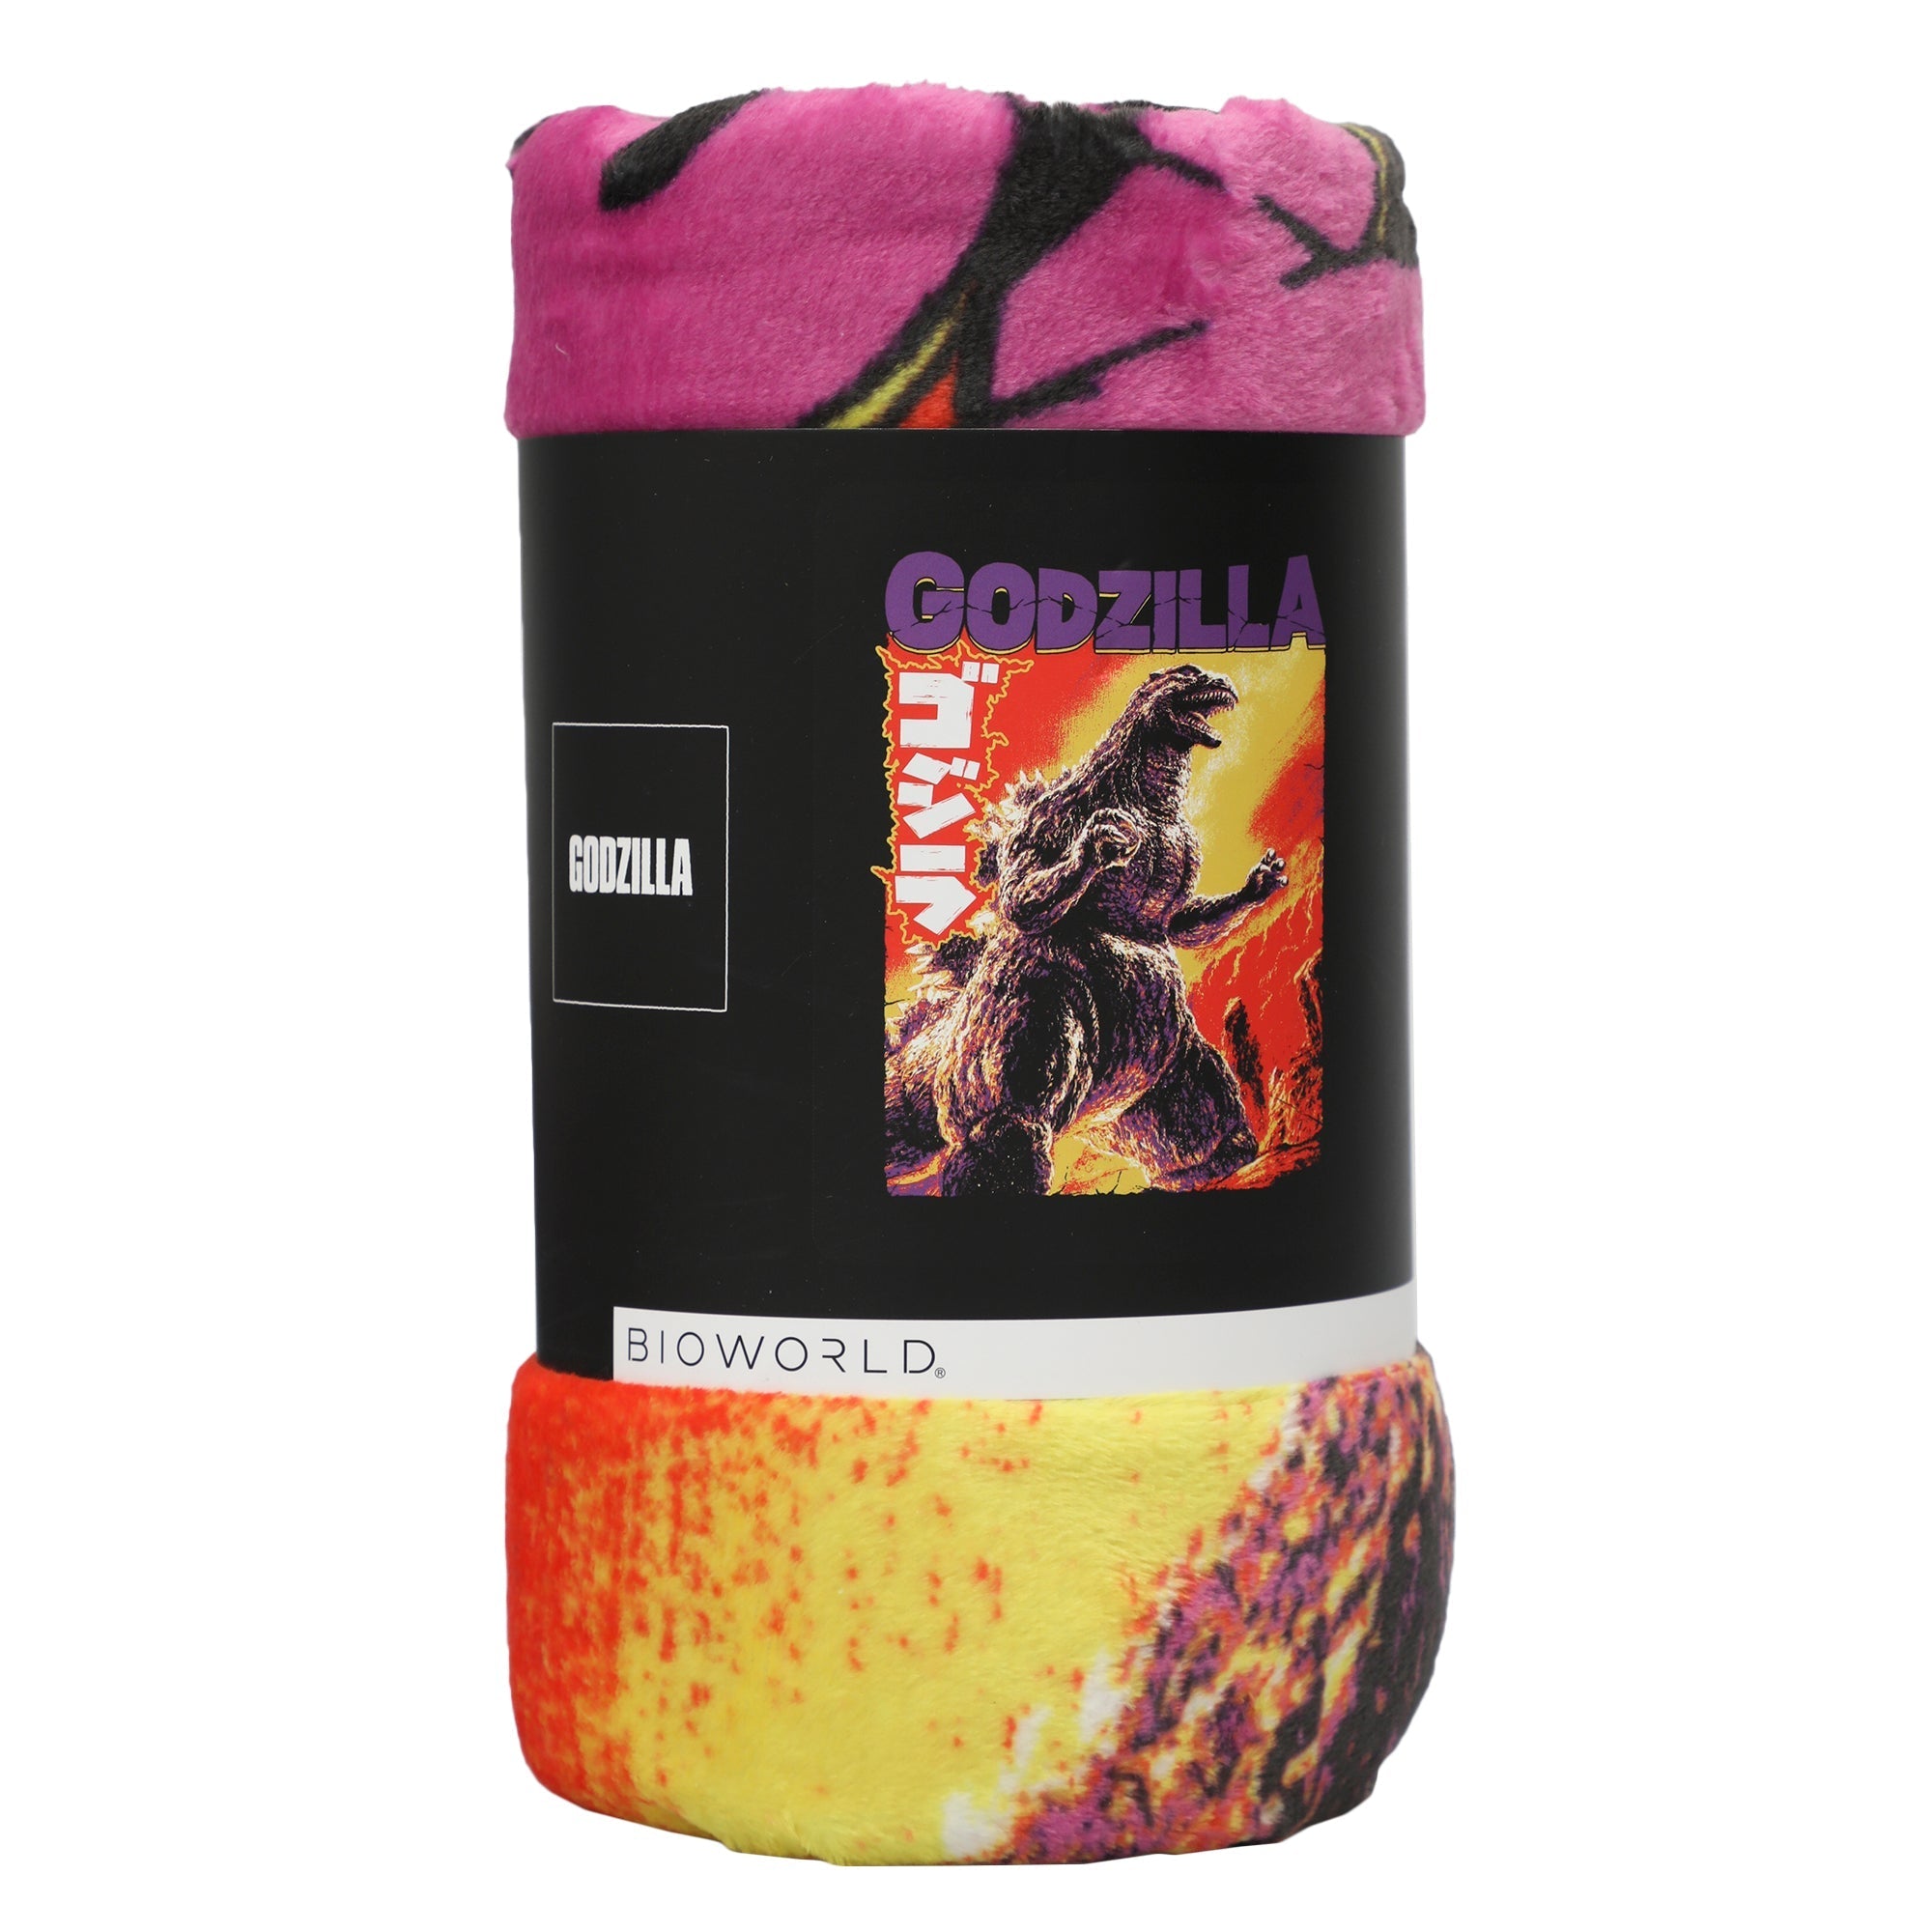 Godzilla - Godzilla Stand Throw Blanket image count 1